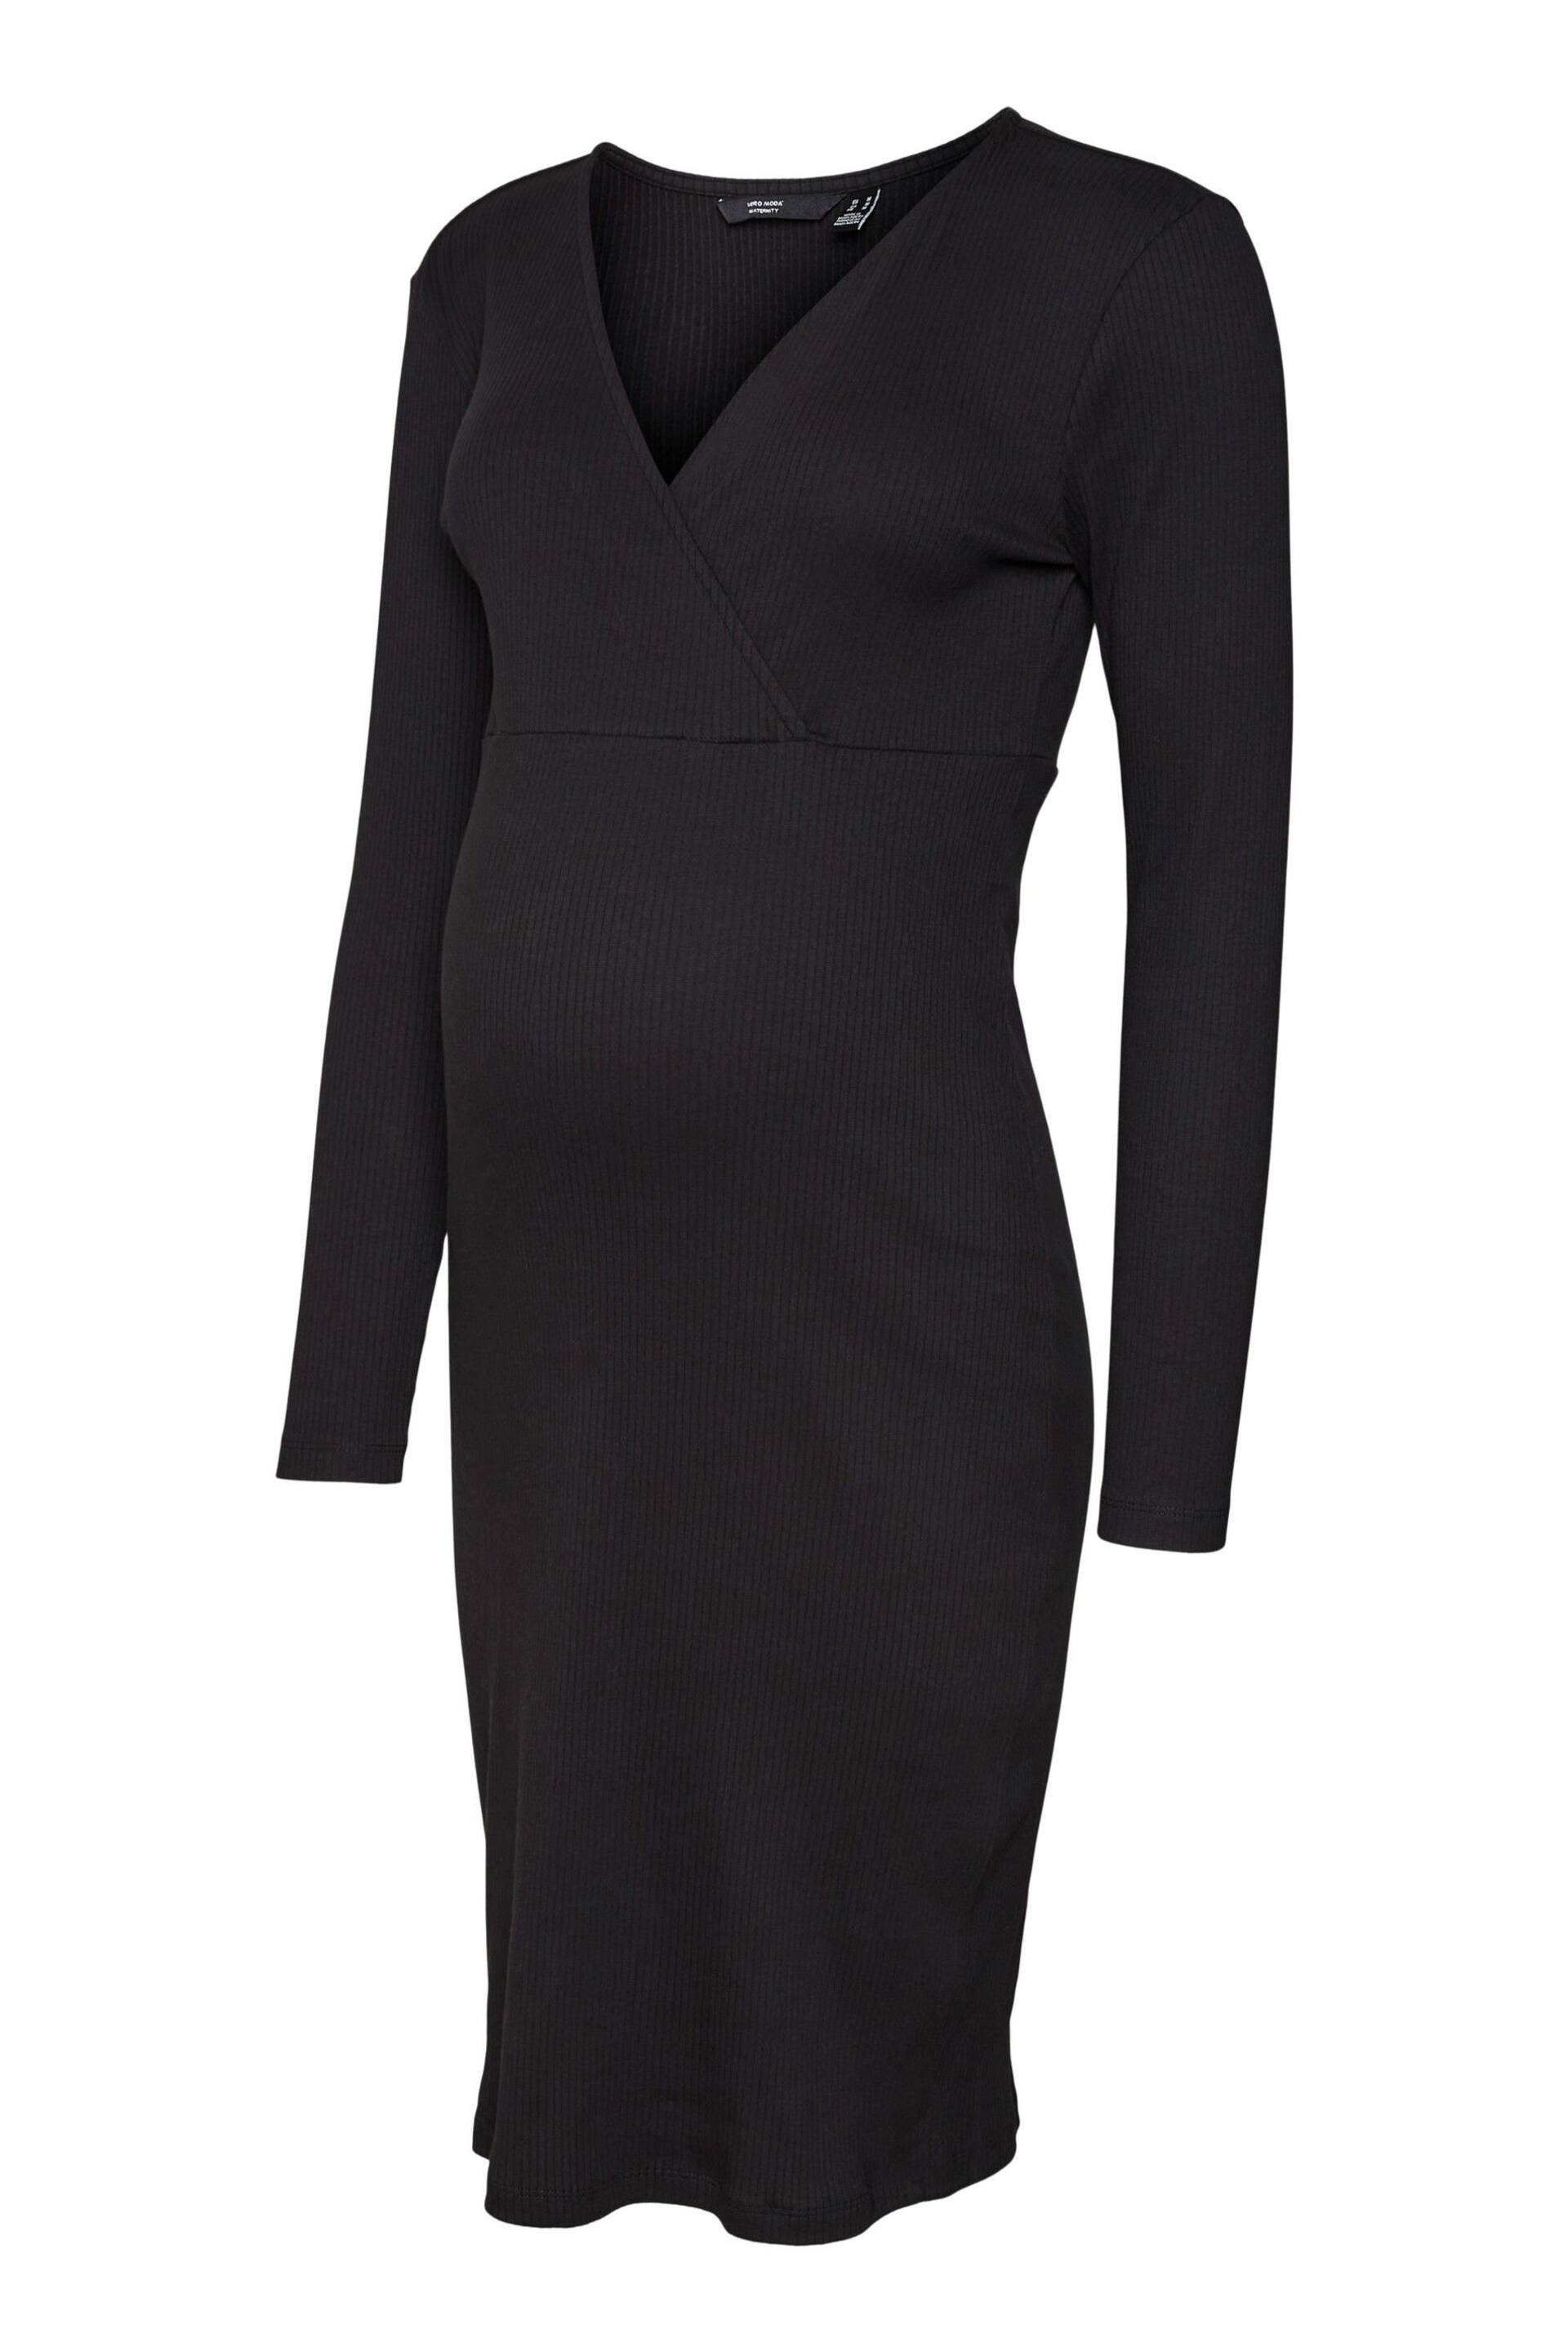 VERO MODA Black Maternity Stretch Comfort Ribbed Wrap Dress - Image 6 of 6